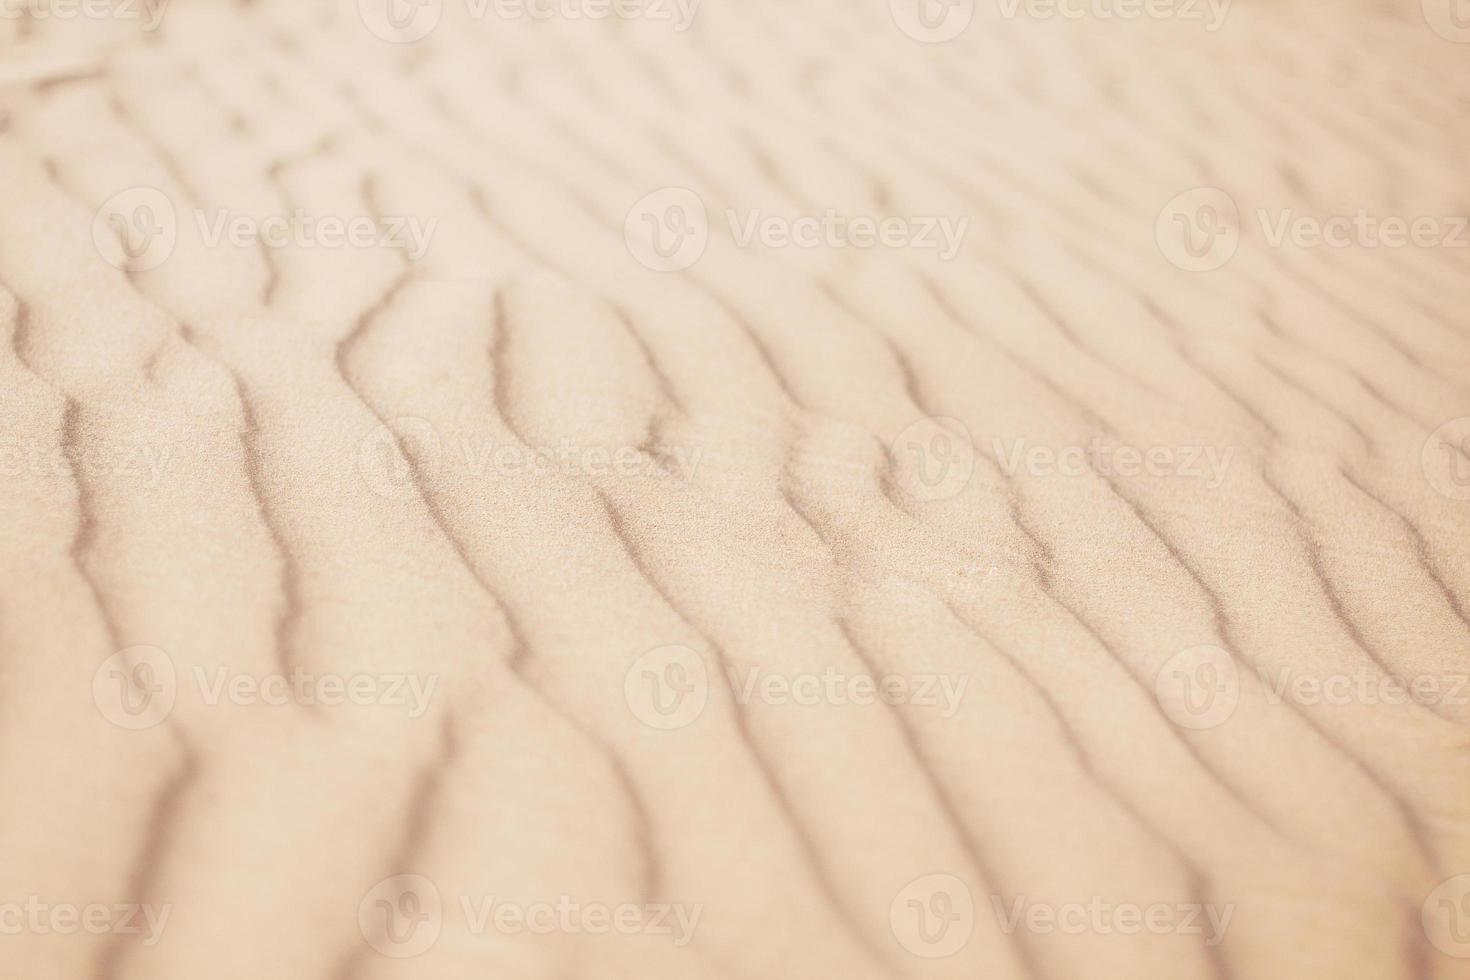 mur texturé de sable photo